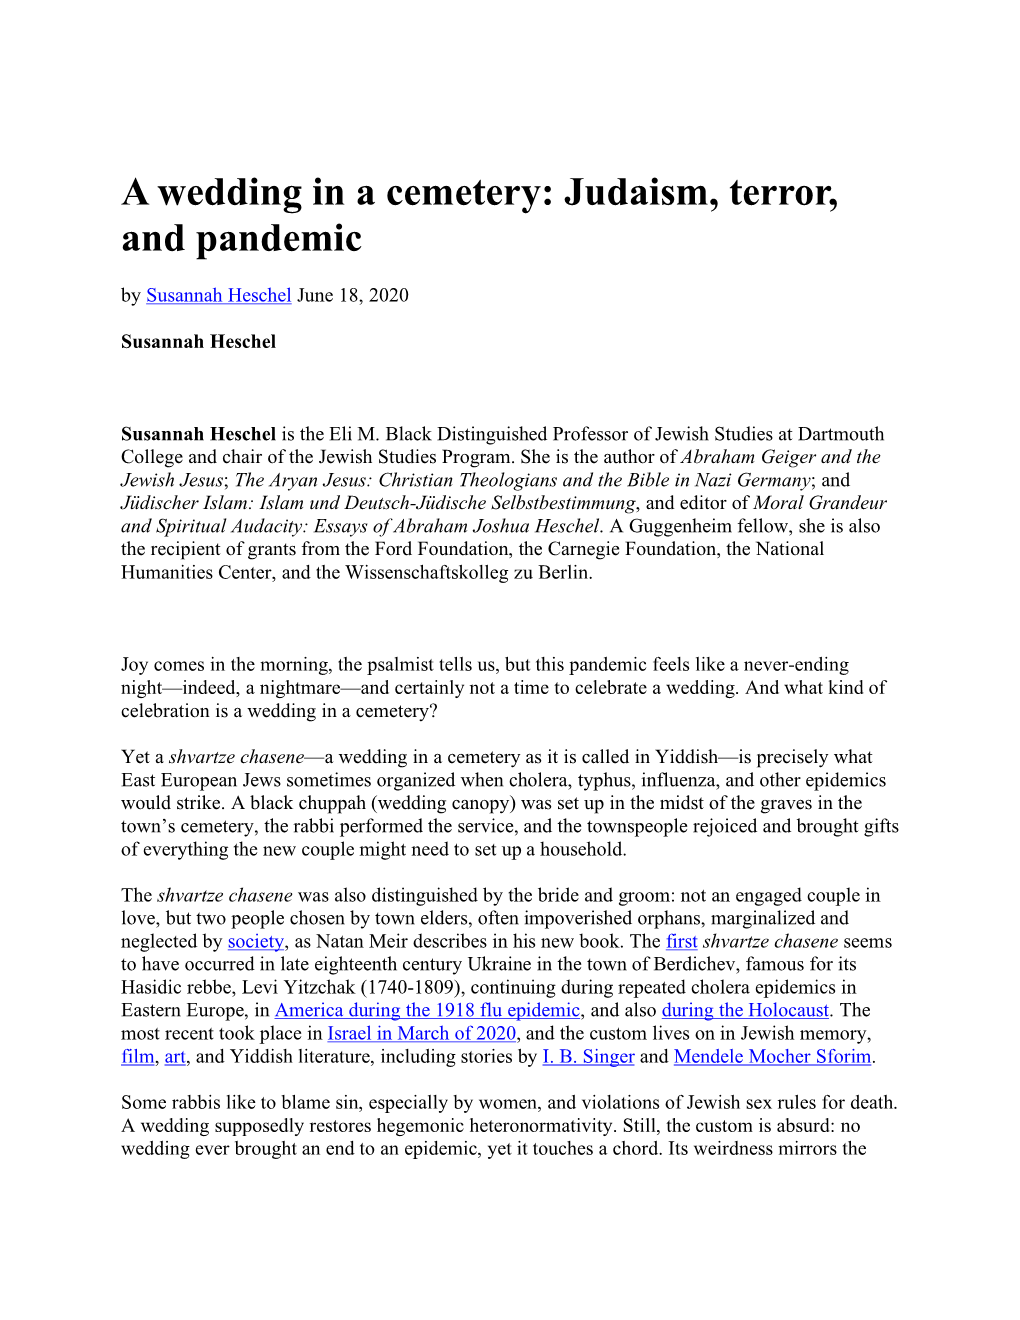 Judaism, Terror, and Pandemic by Susannah Heschel June 18, 2020